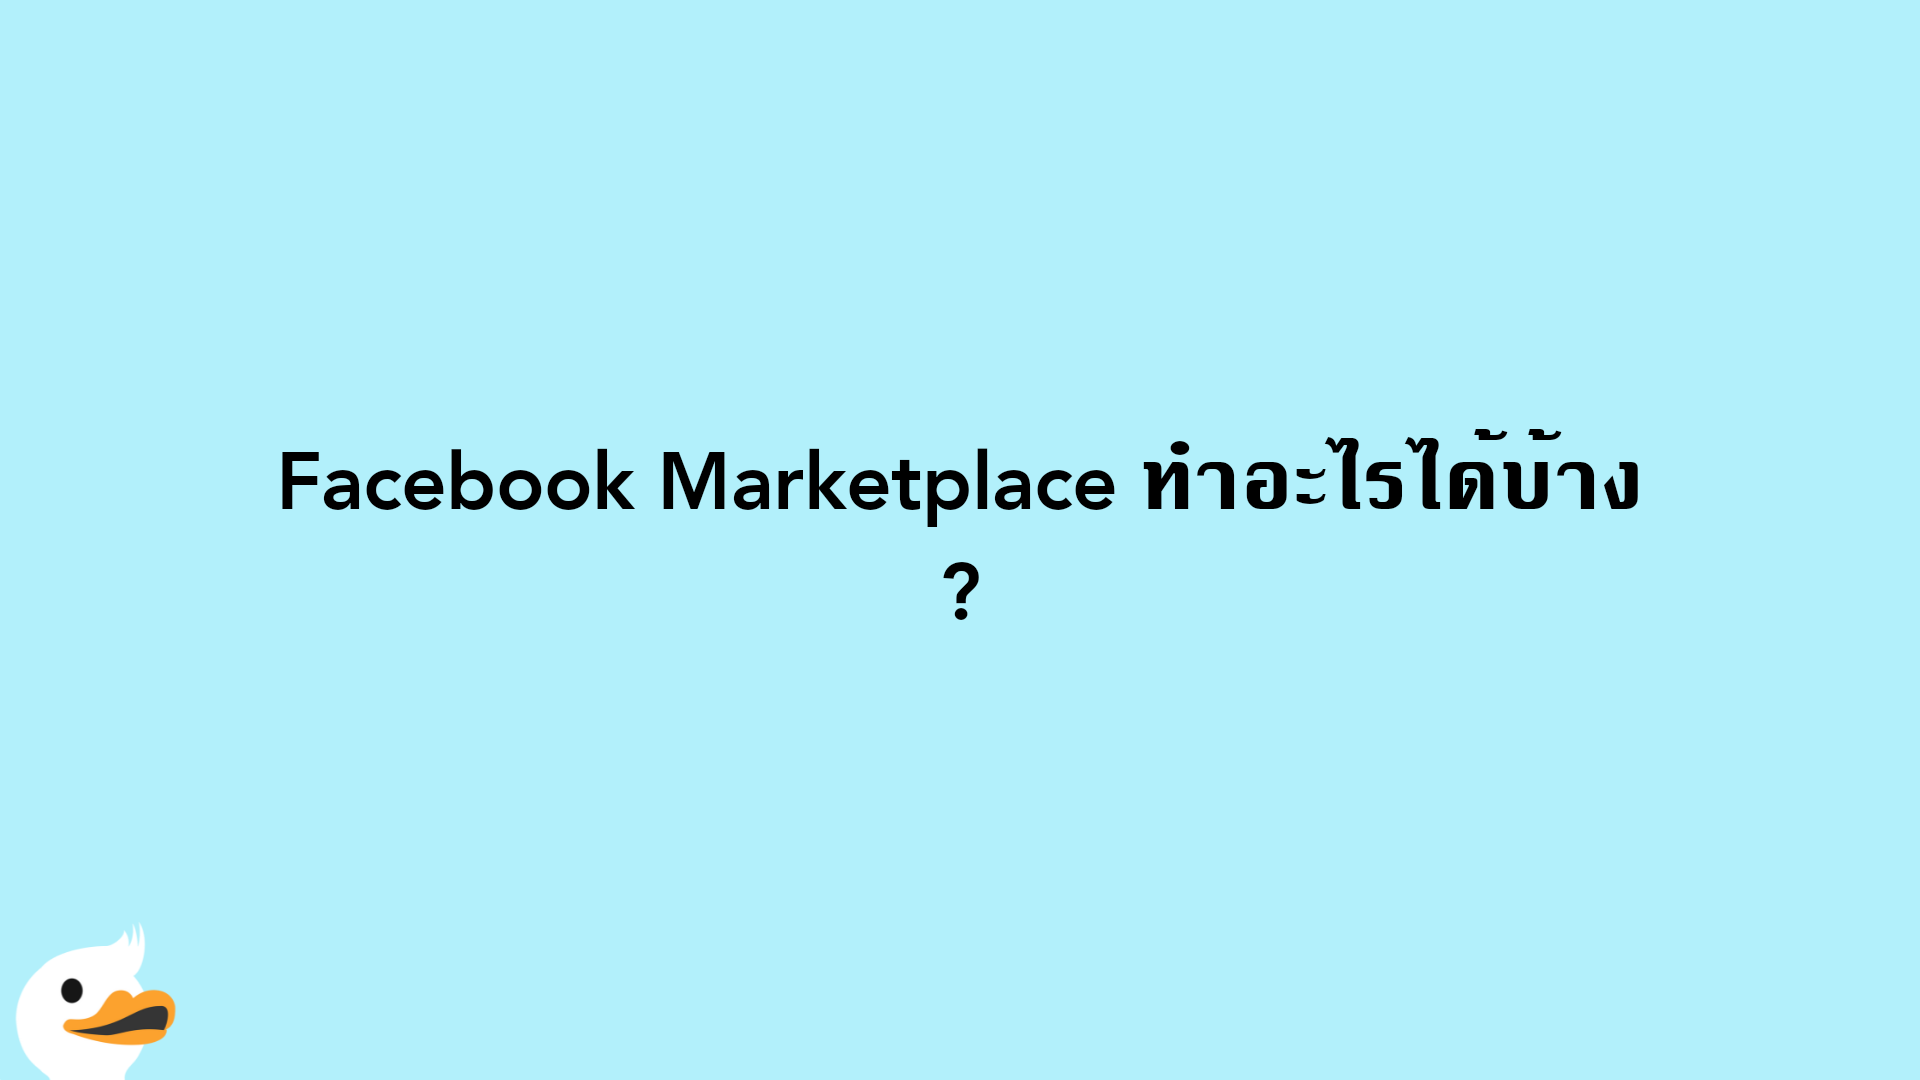 Facebook Marketplace ทำอะไรได้บ้าง?